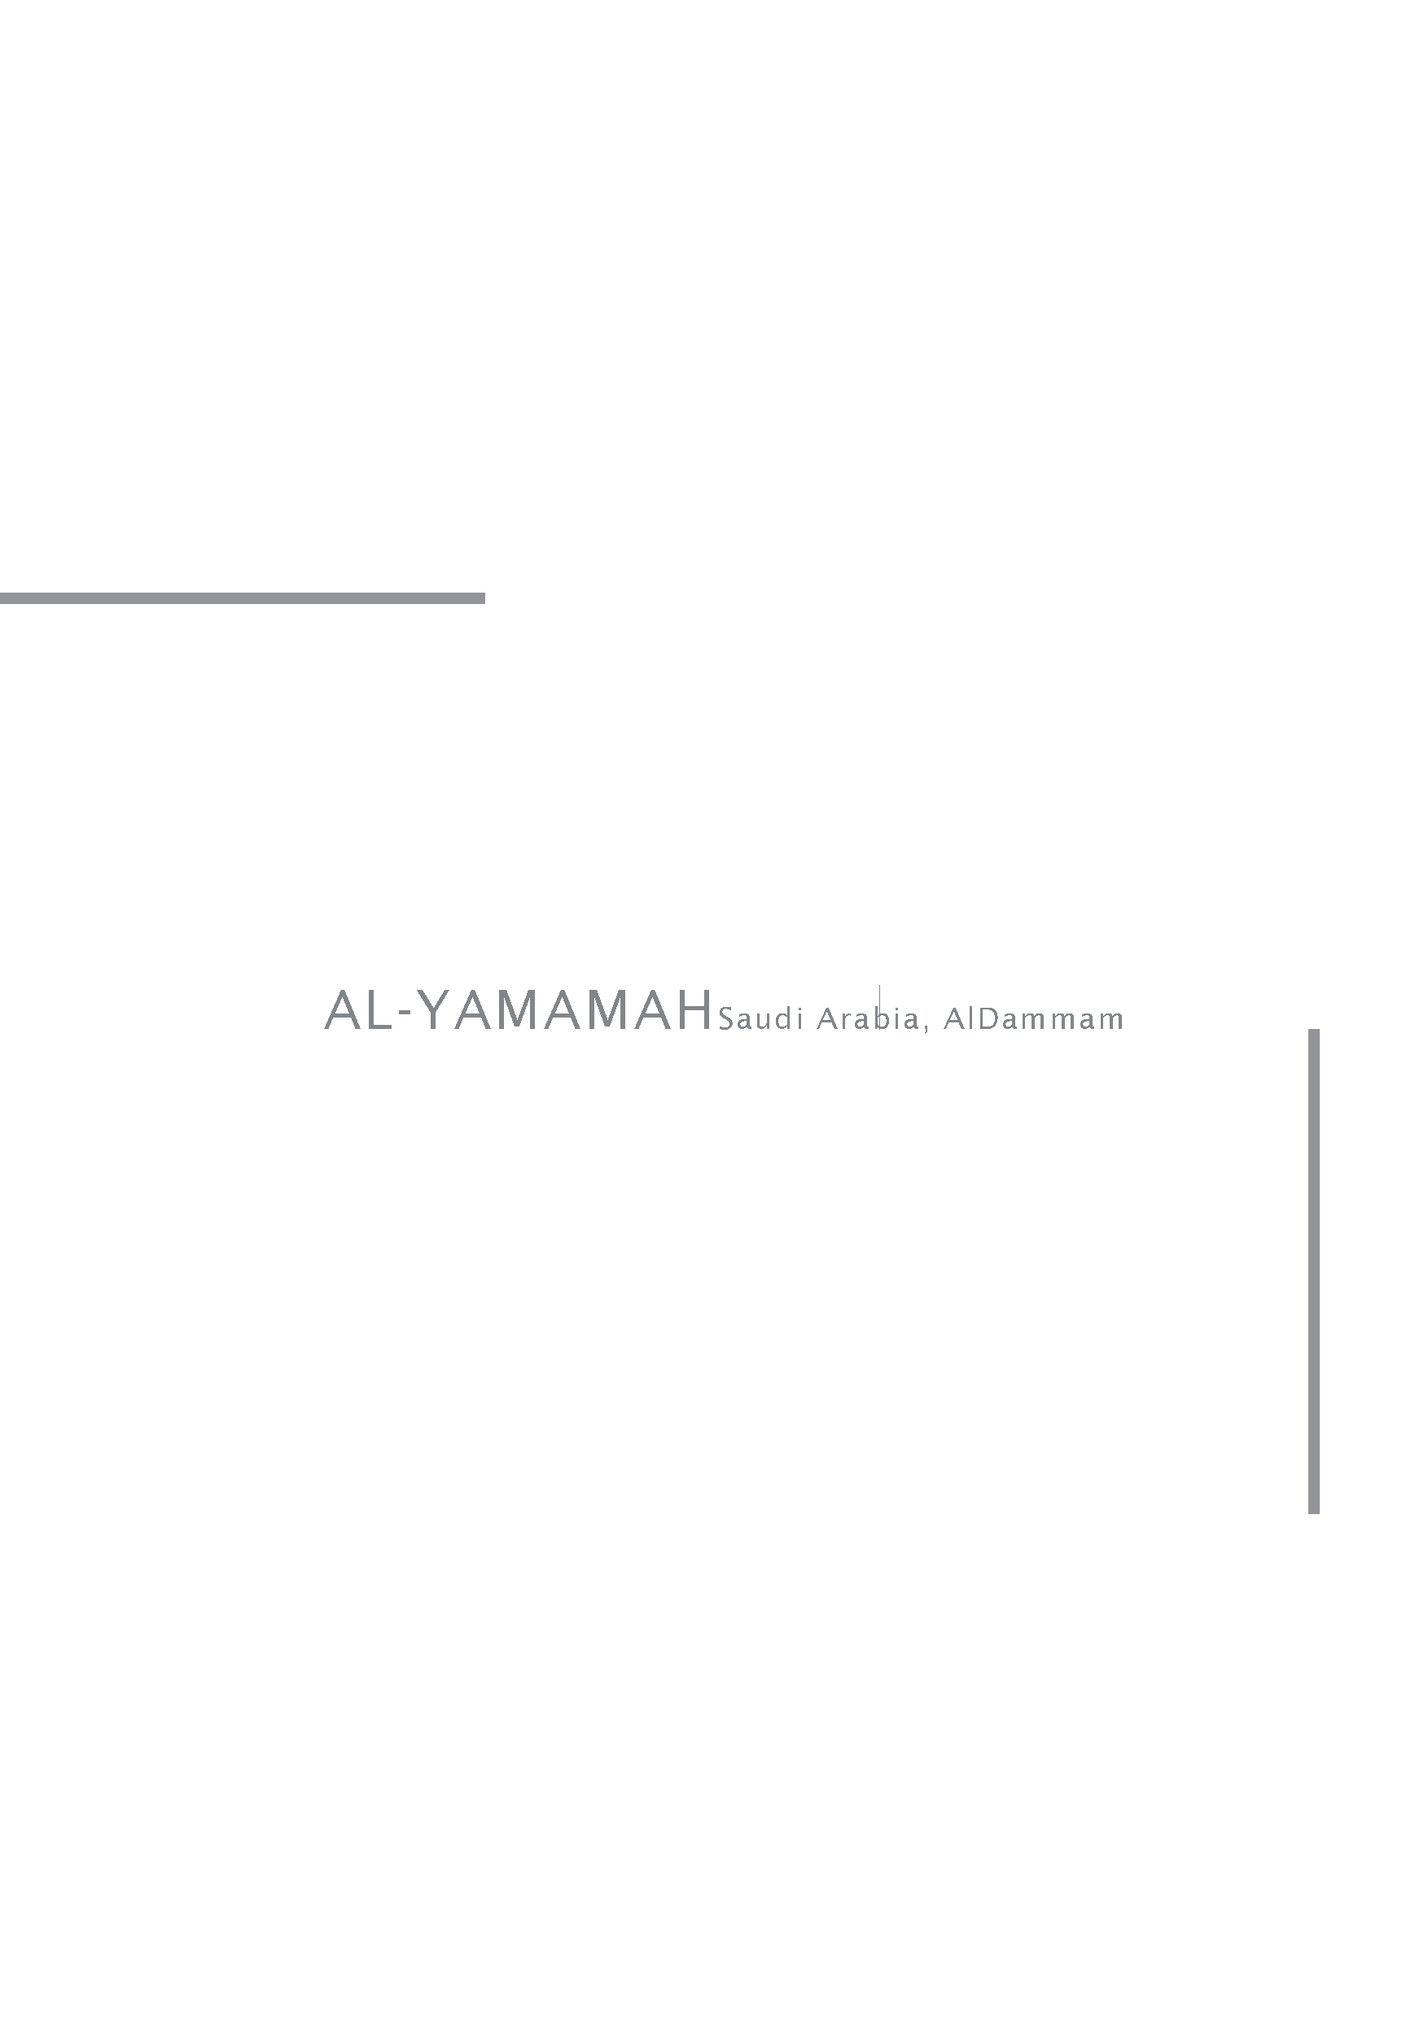 AL-YAMAMAH Saudi Arabia, AlDammam